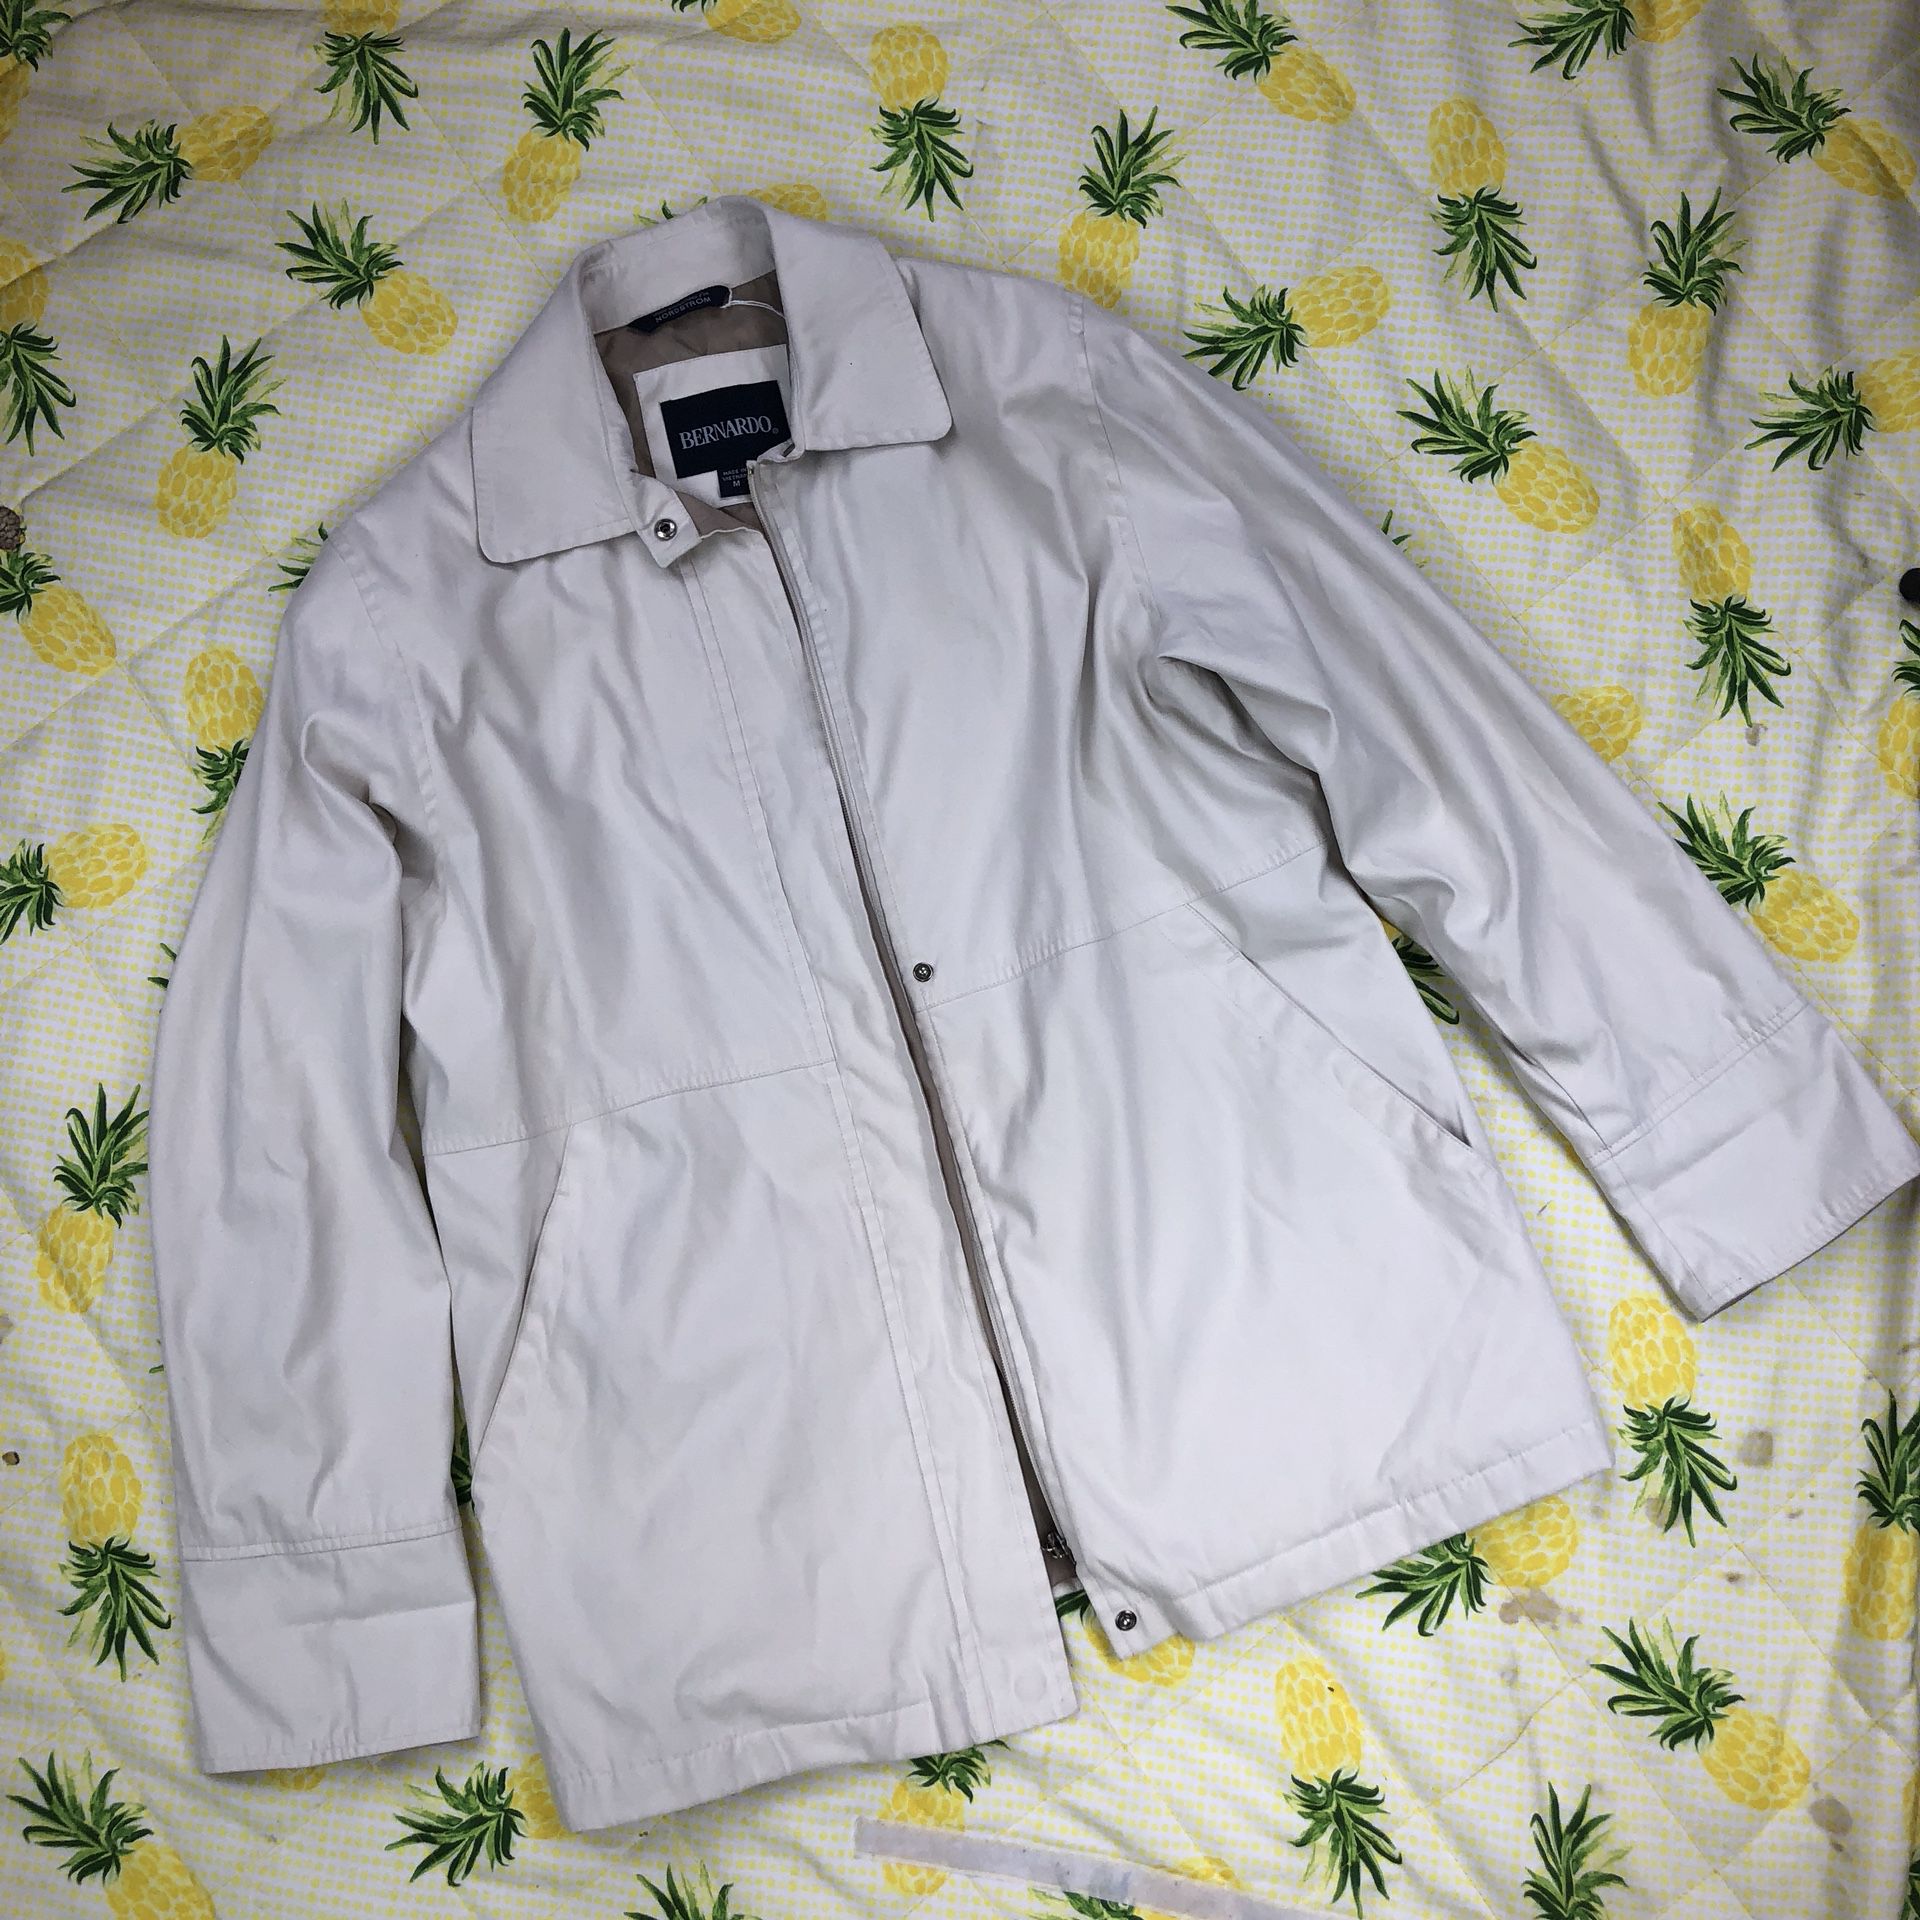 👔 Vintage 90's Bernardo for Nordstrom Zip Up Dress Jacket Offwhite Sz Medium 🏢